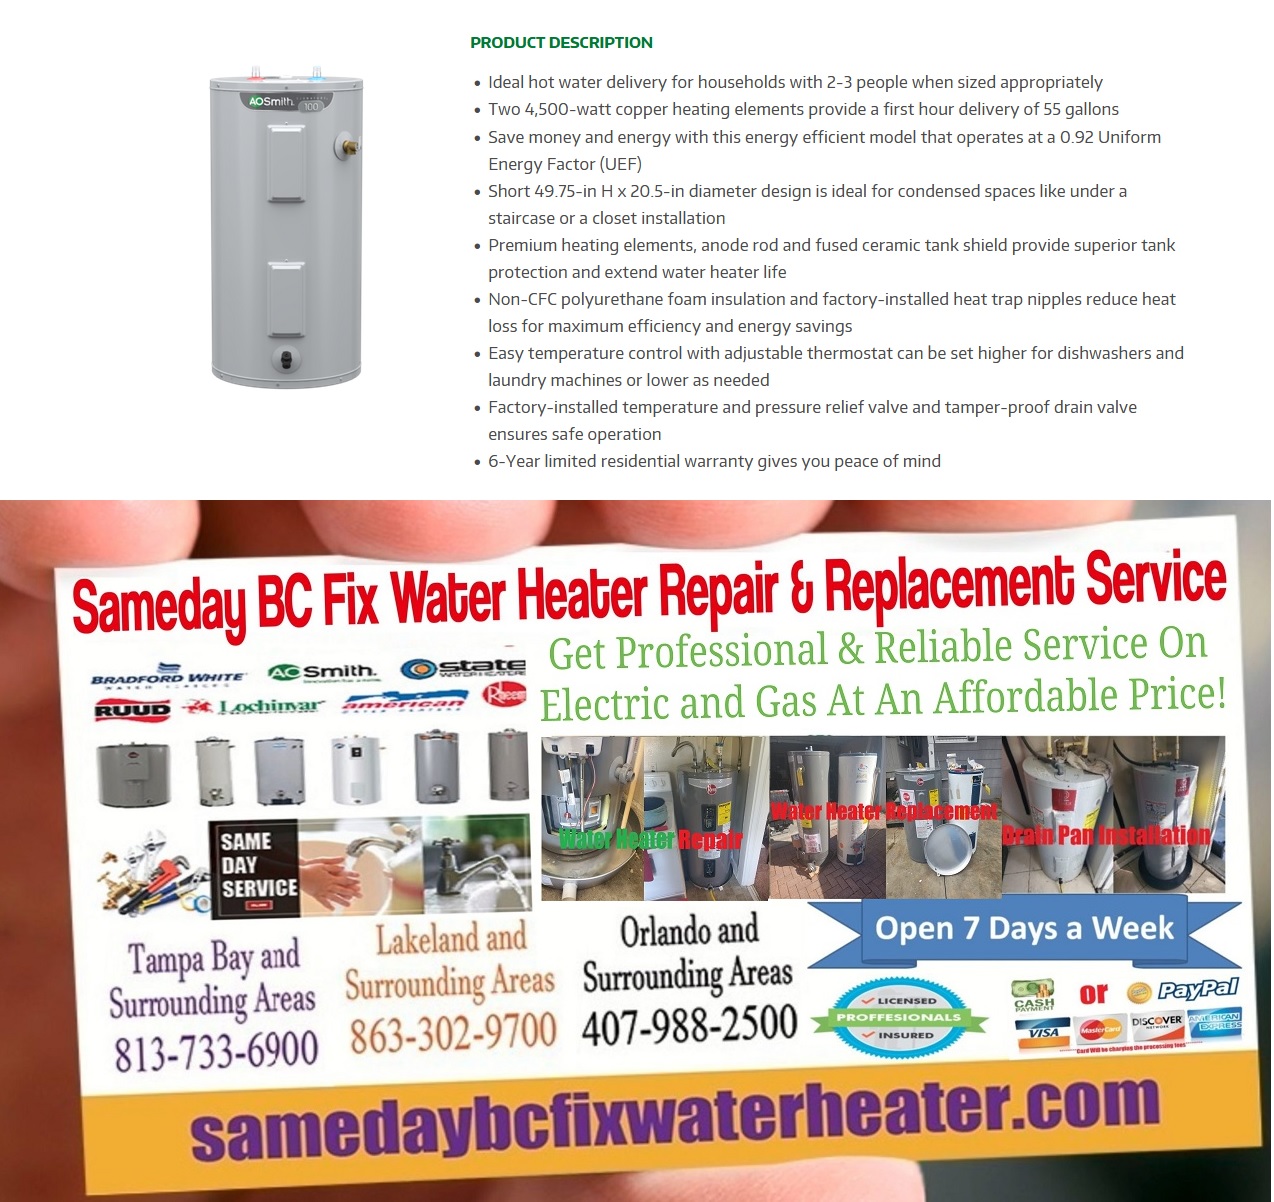 A.O. Smith E6-40R45DV Signature 100 Series 40 Gallon Electric Water Heater Overview